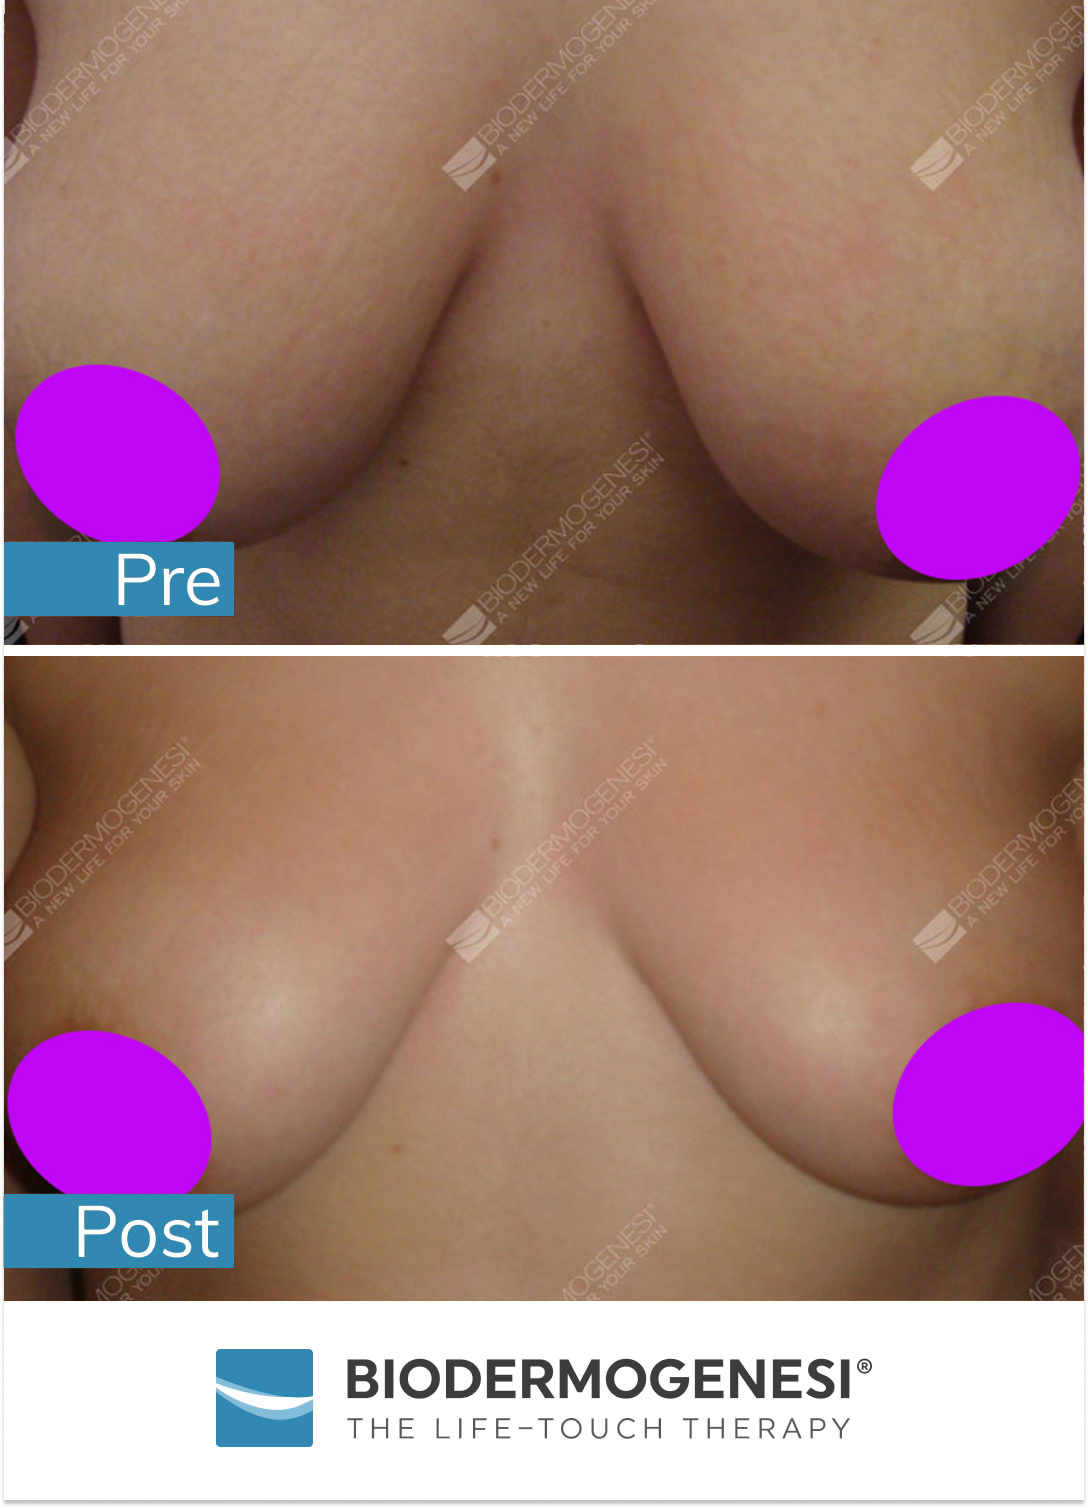 Biodermogenesi Breast Lifting treatments - Clinics International